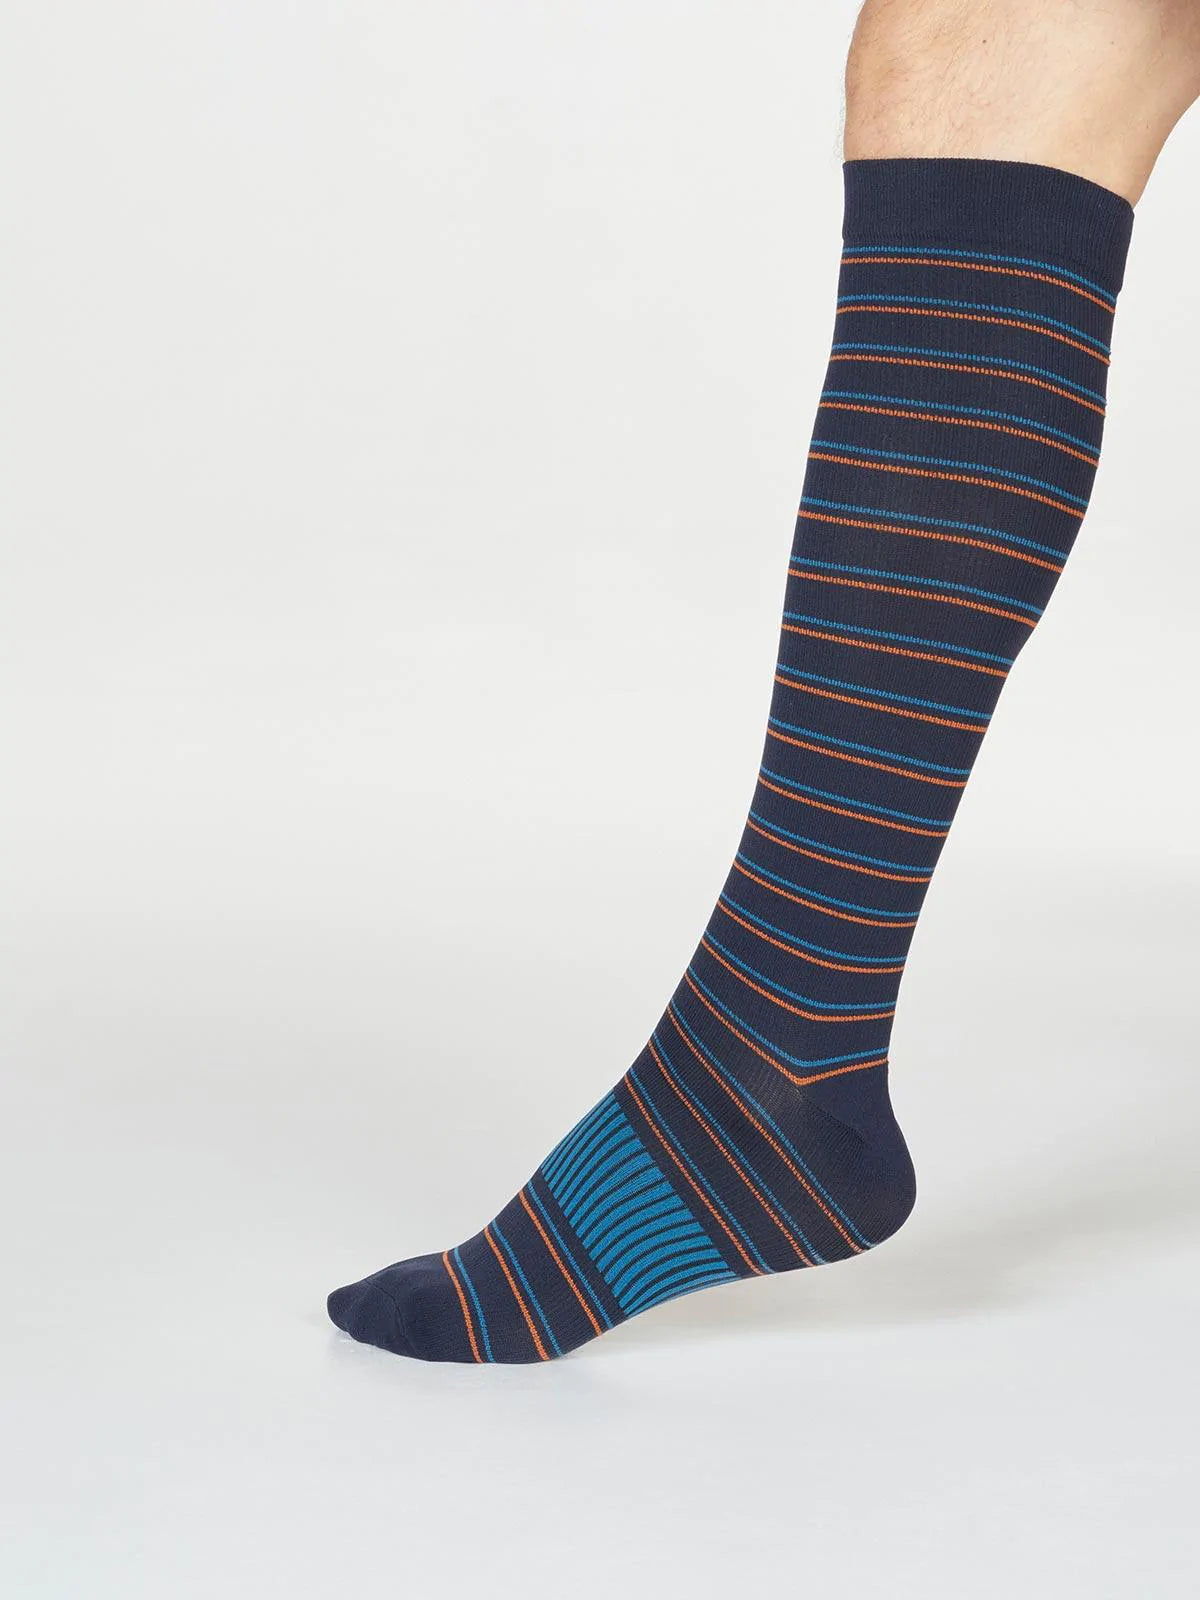 Sustainable Fibre Men's Flight Compression Socks in Navy Stripes